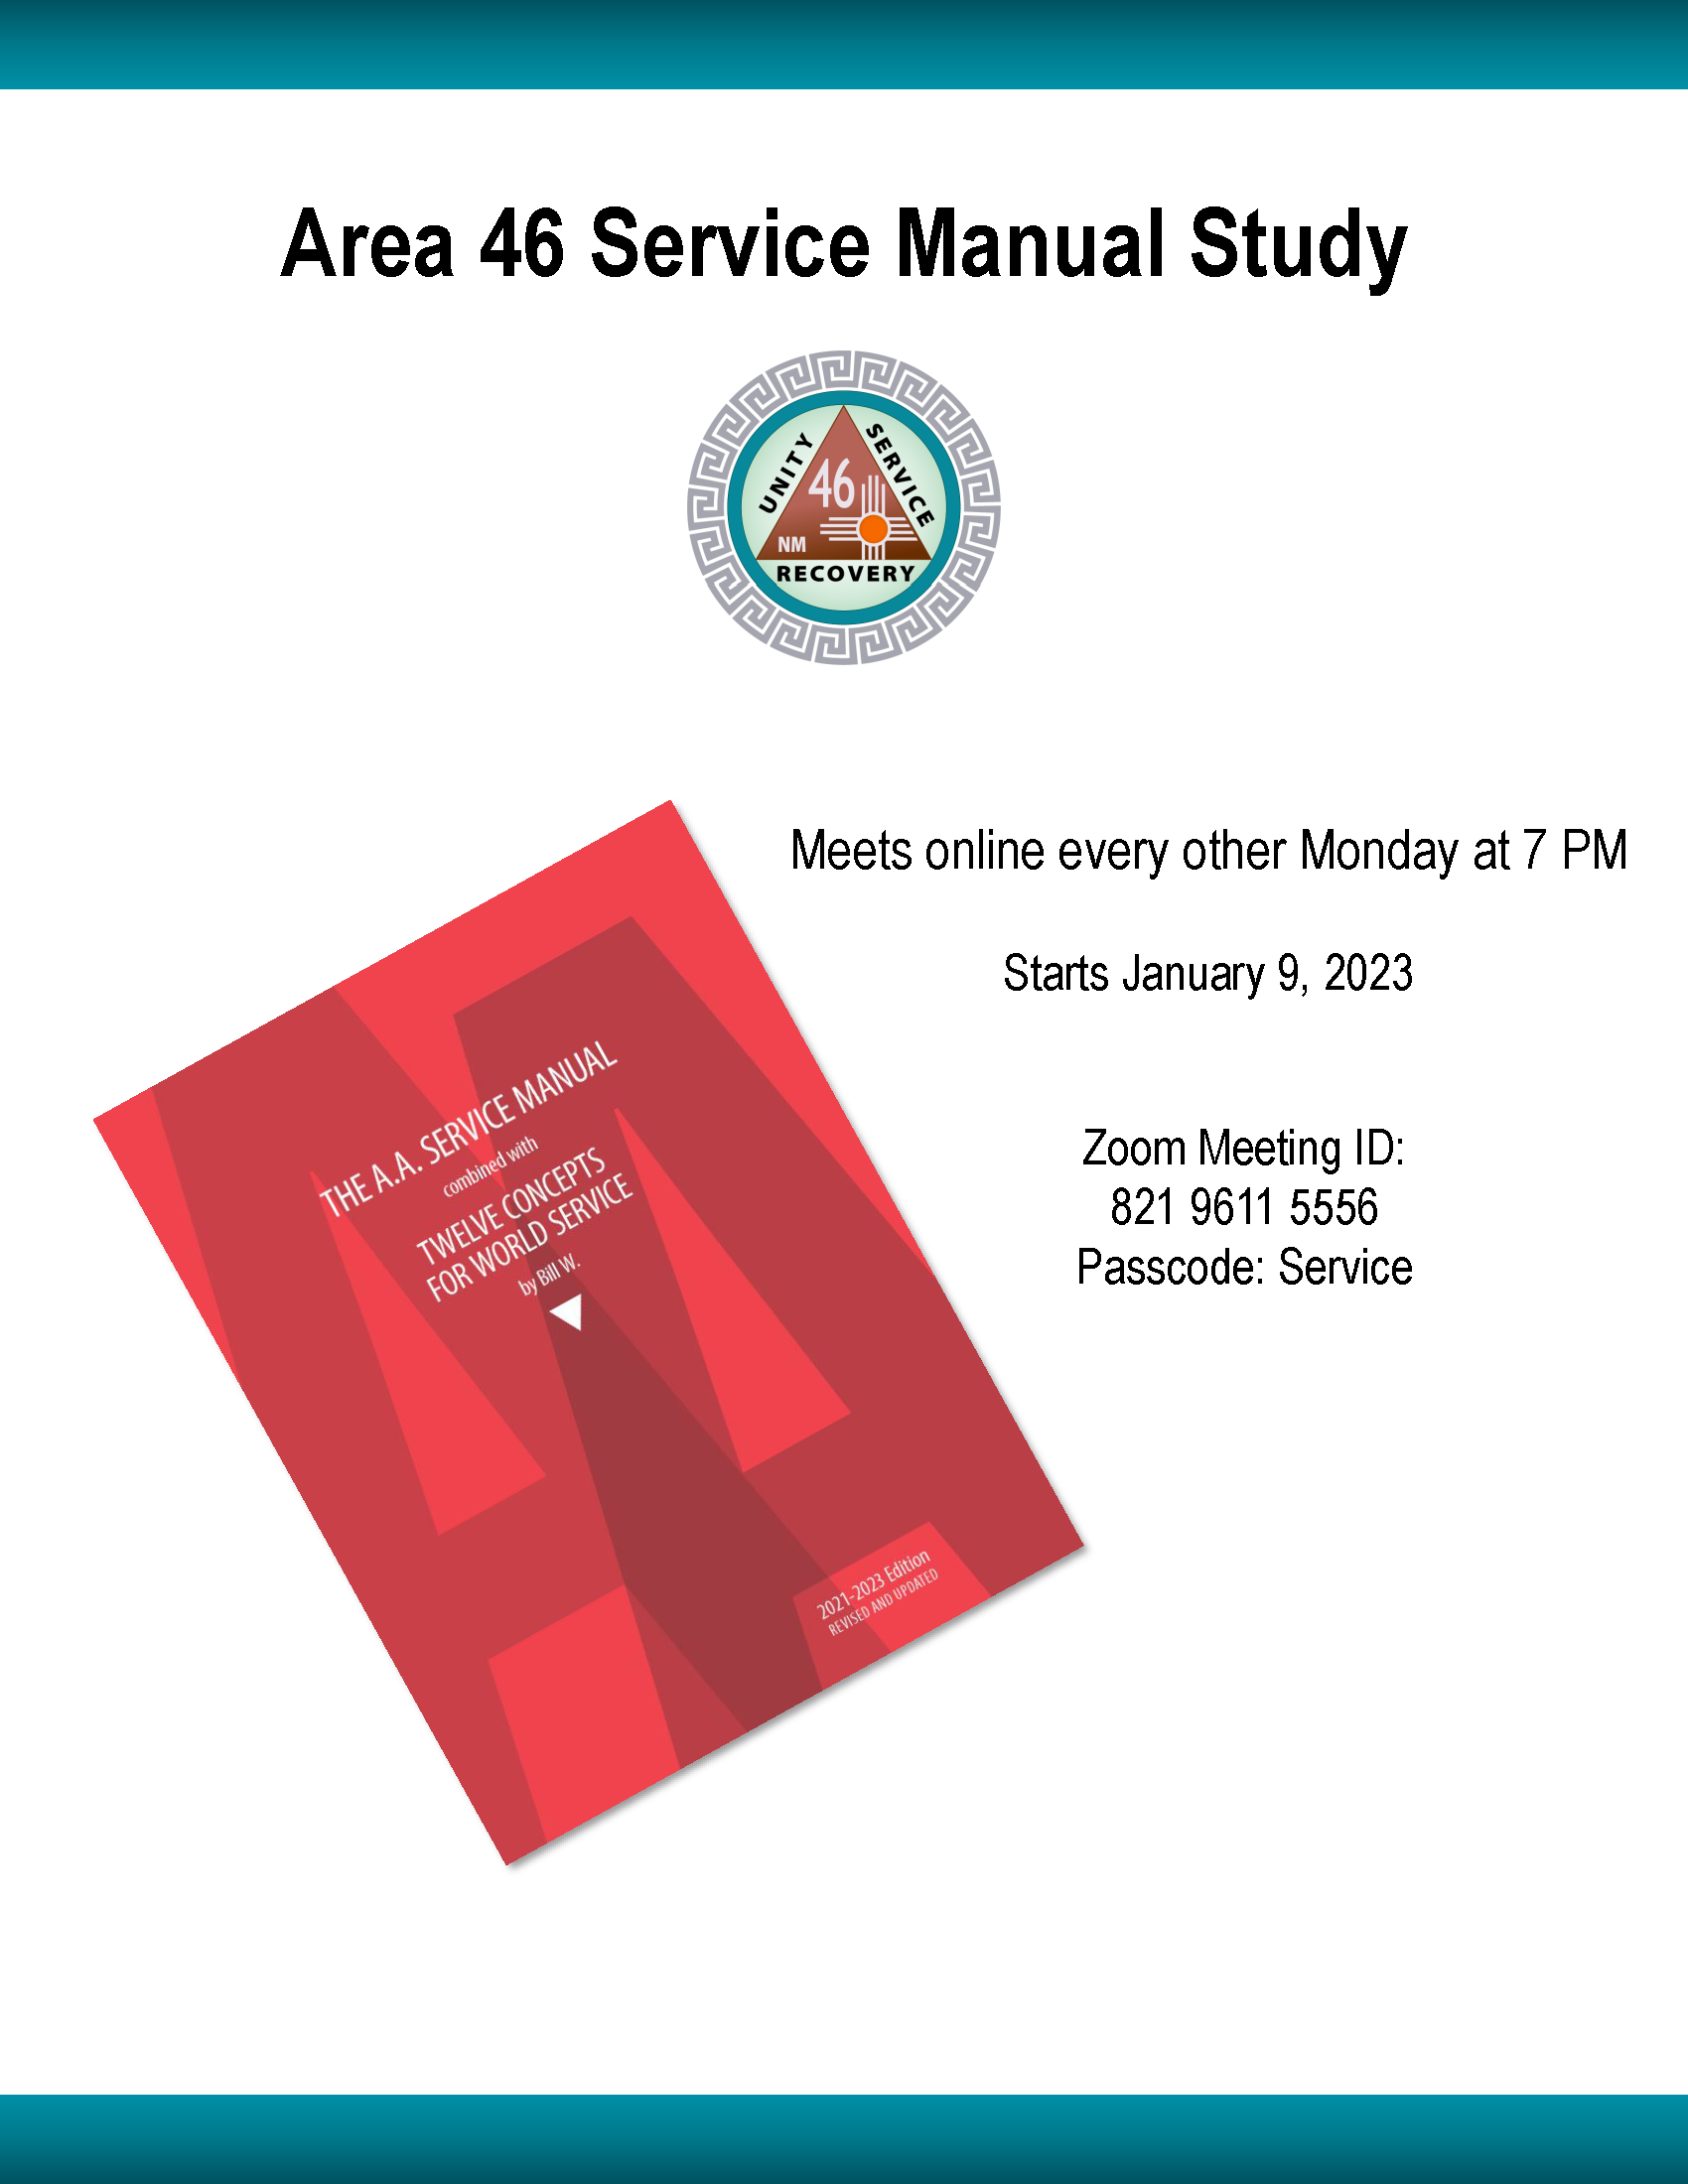 Area 46 Service Manual Study Flyer_Jan 2023